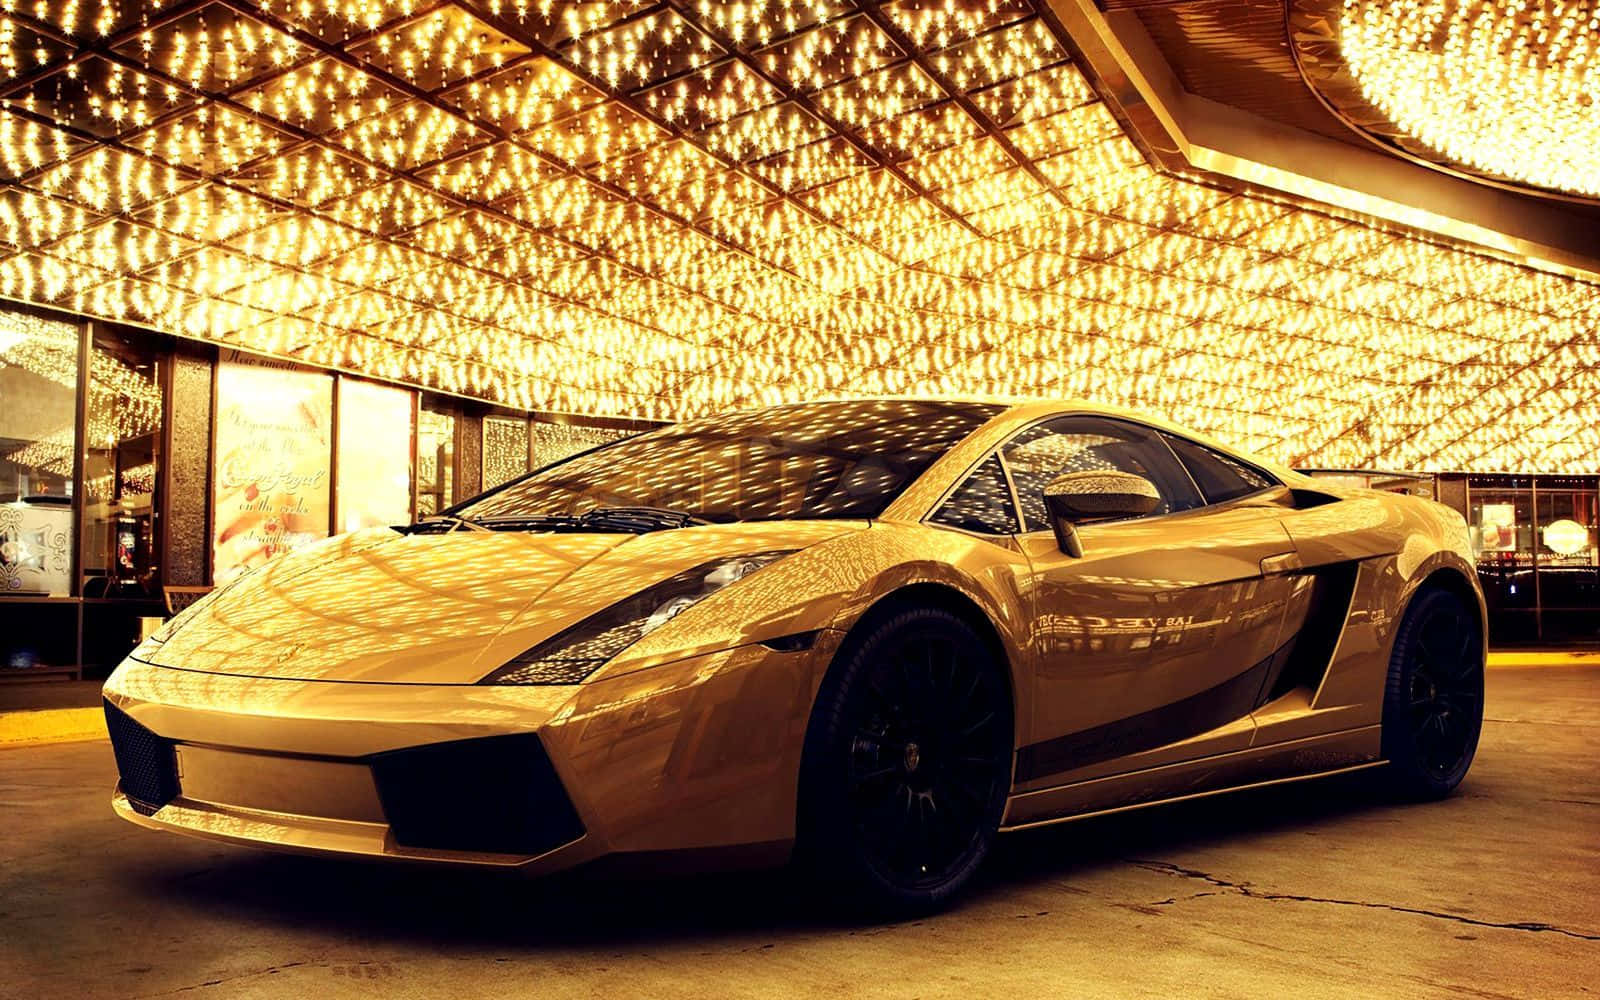 Gold Cars In Casino Wallpaper